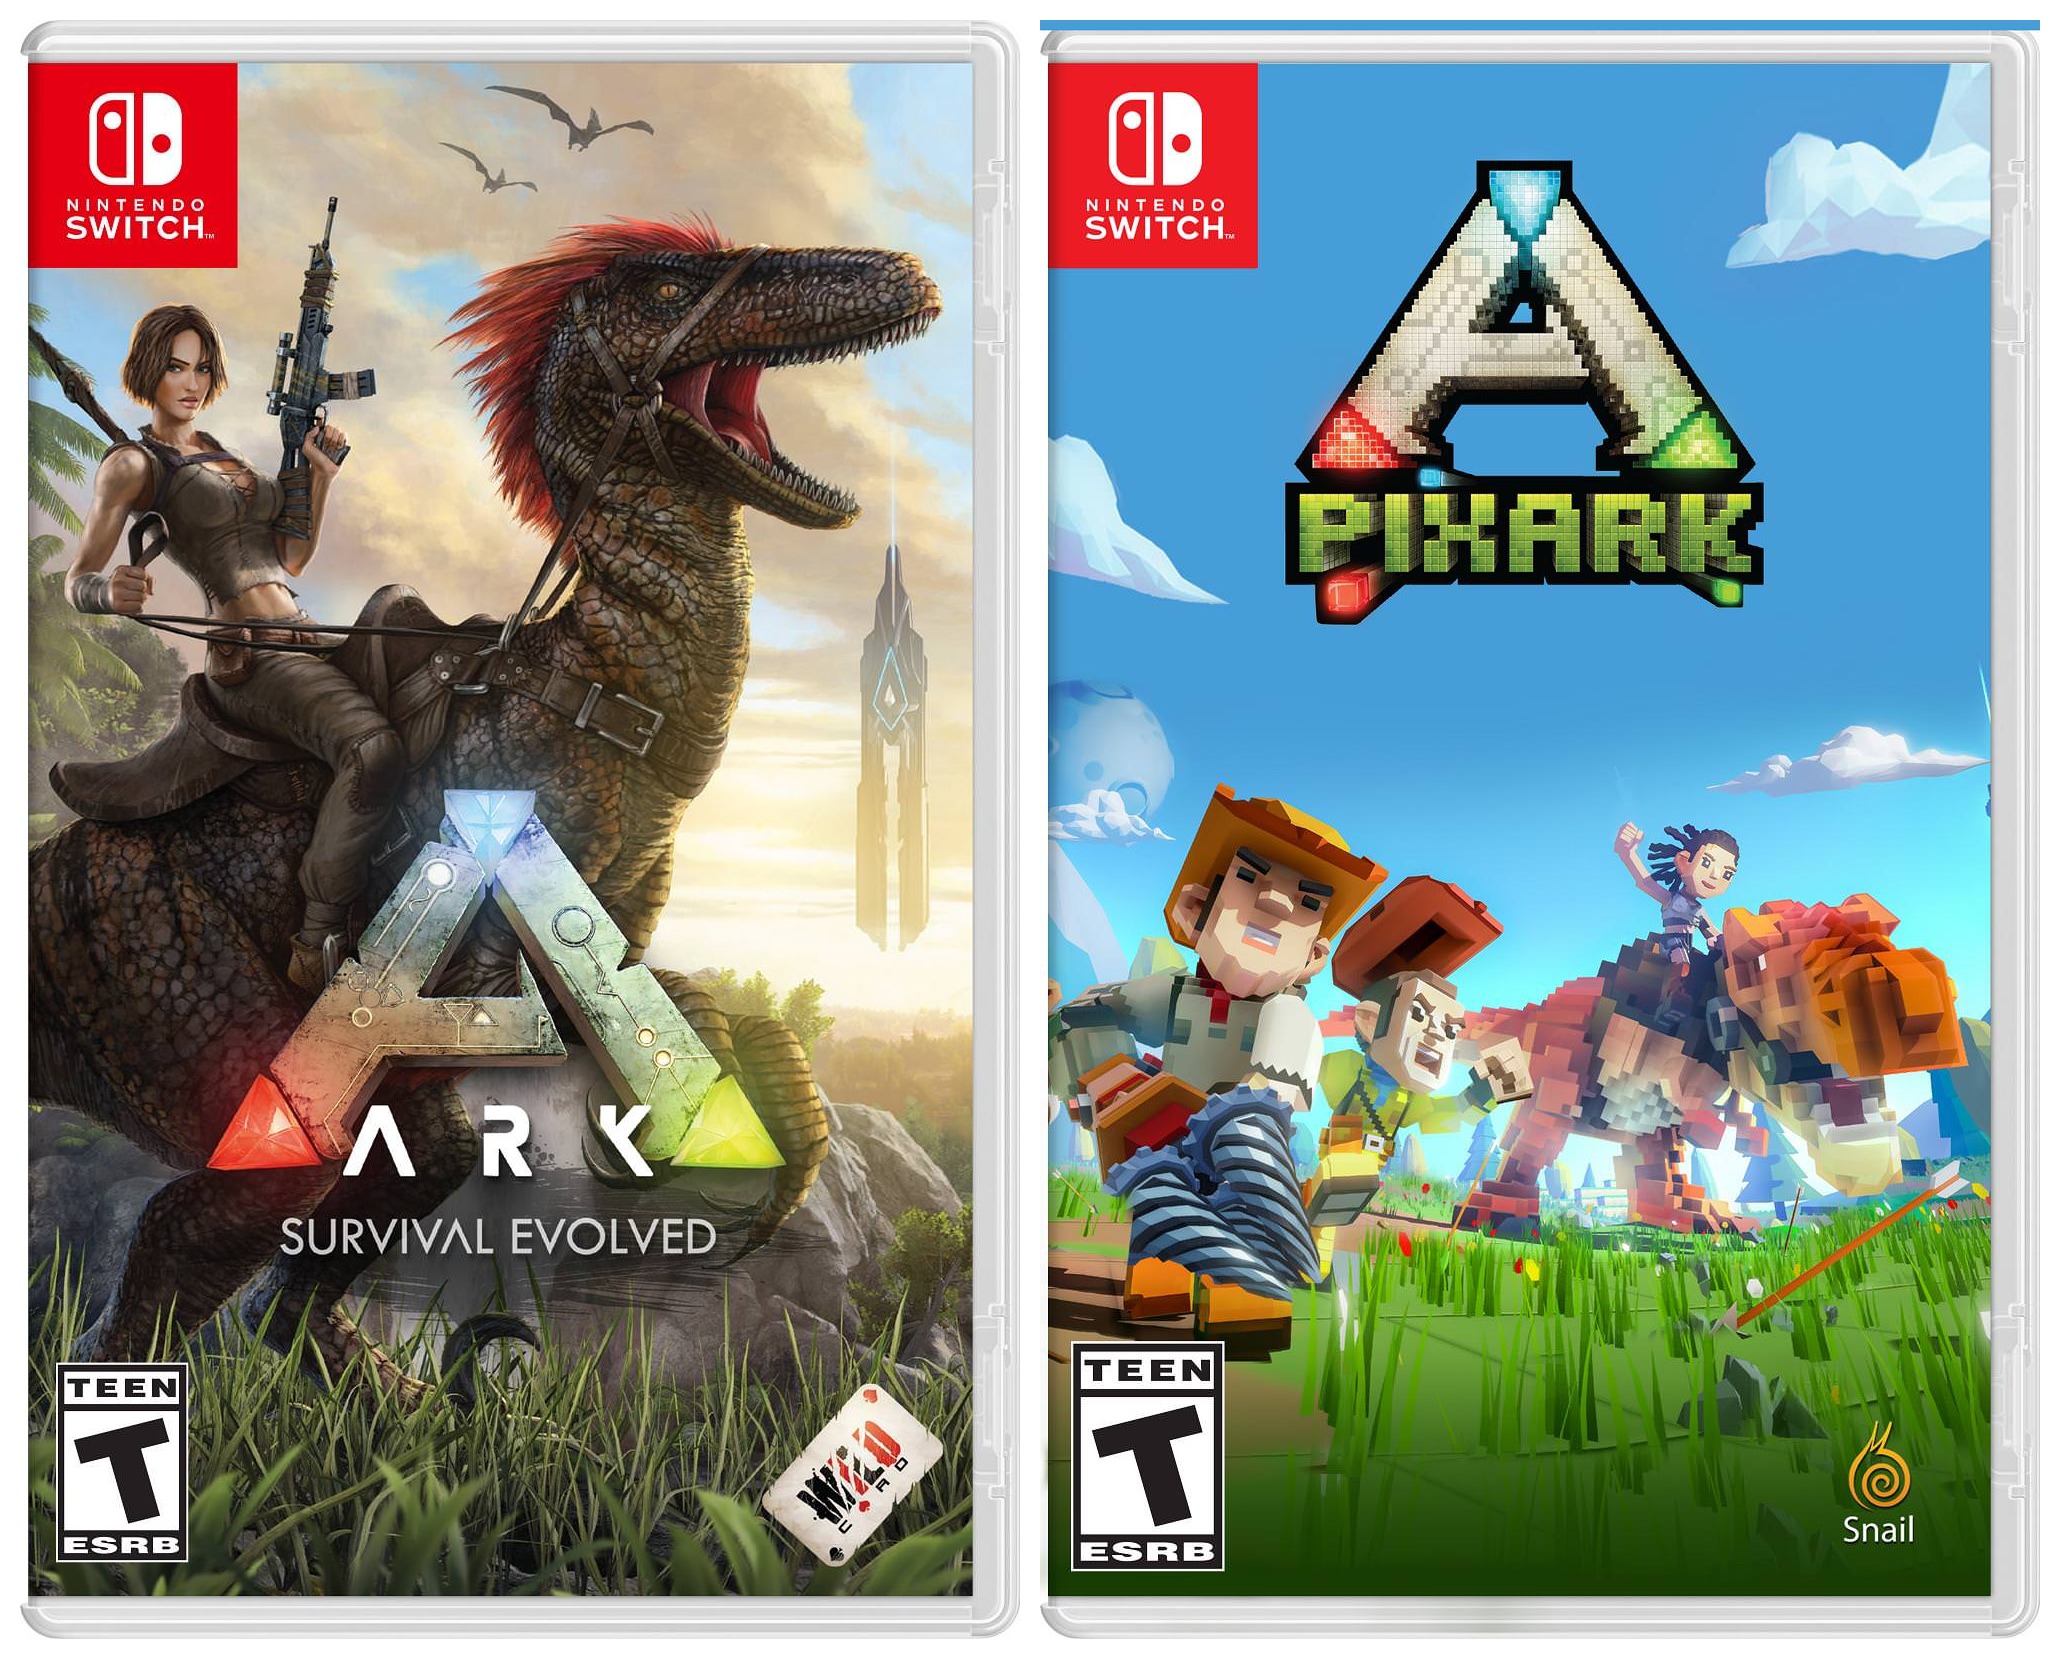 ARK: Survival Evolved, PixARK physical releases announced